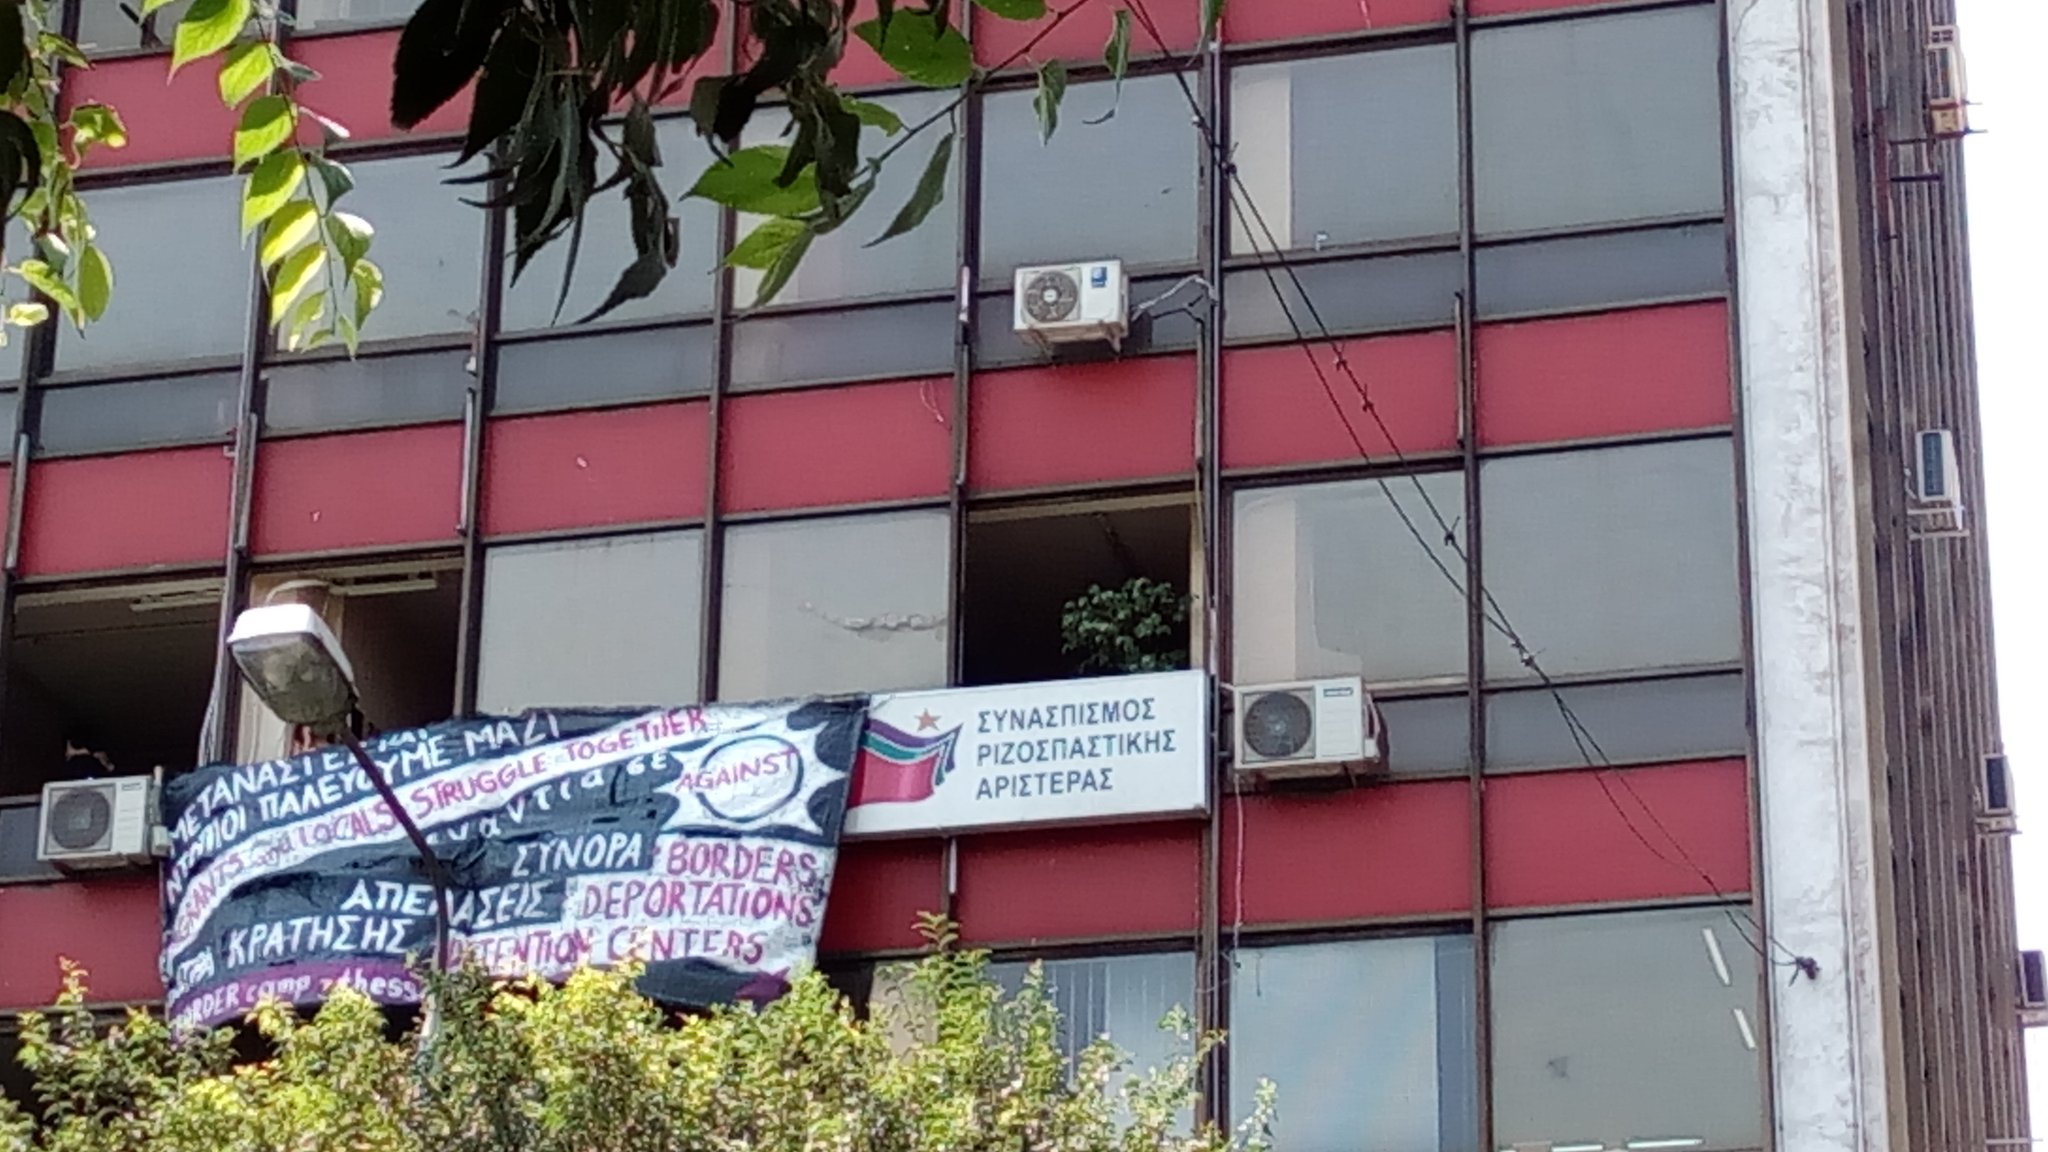 Oficinas de Syriza en Tesalónica.